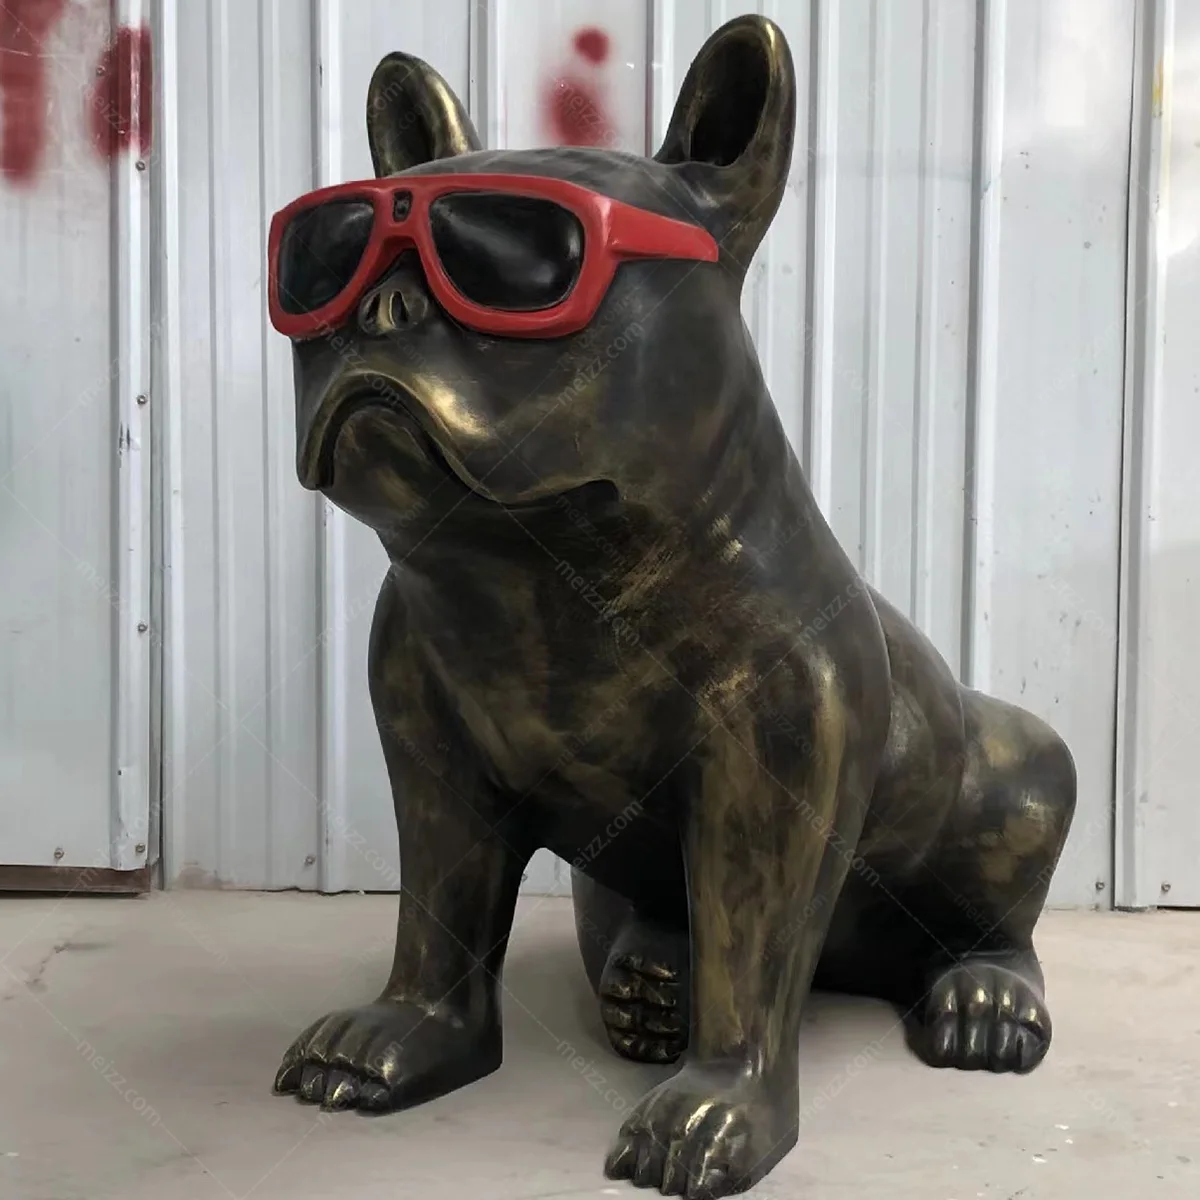 graffiti bulldog statue